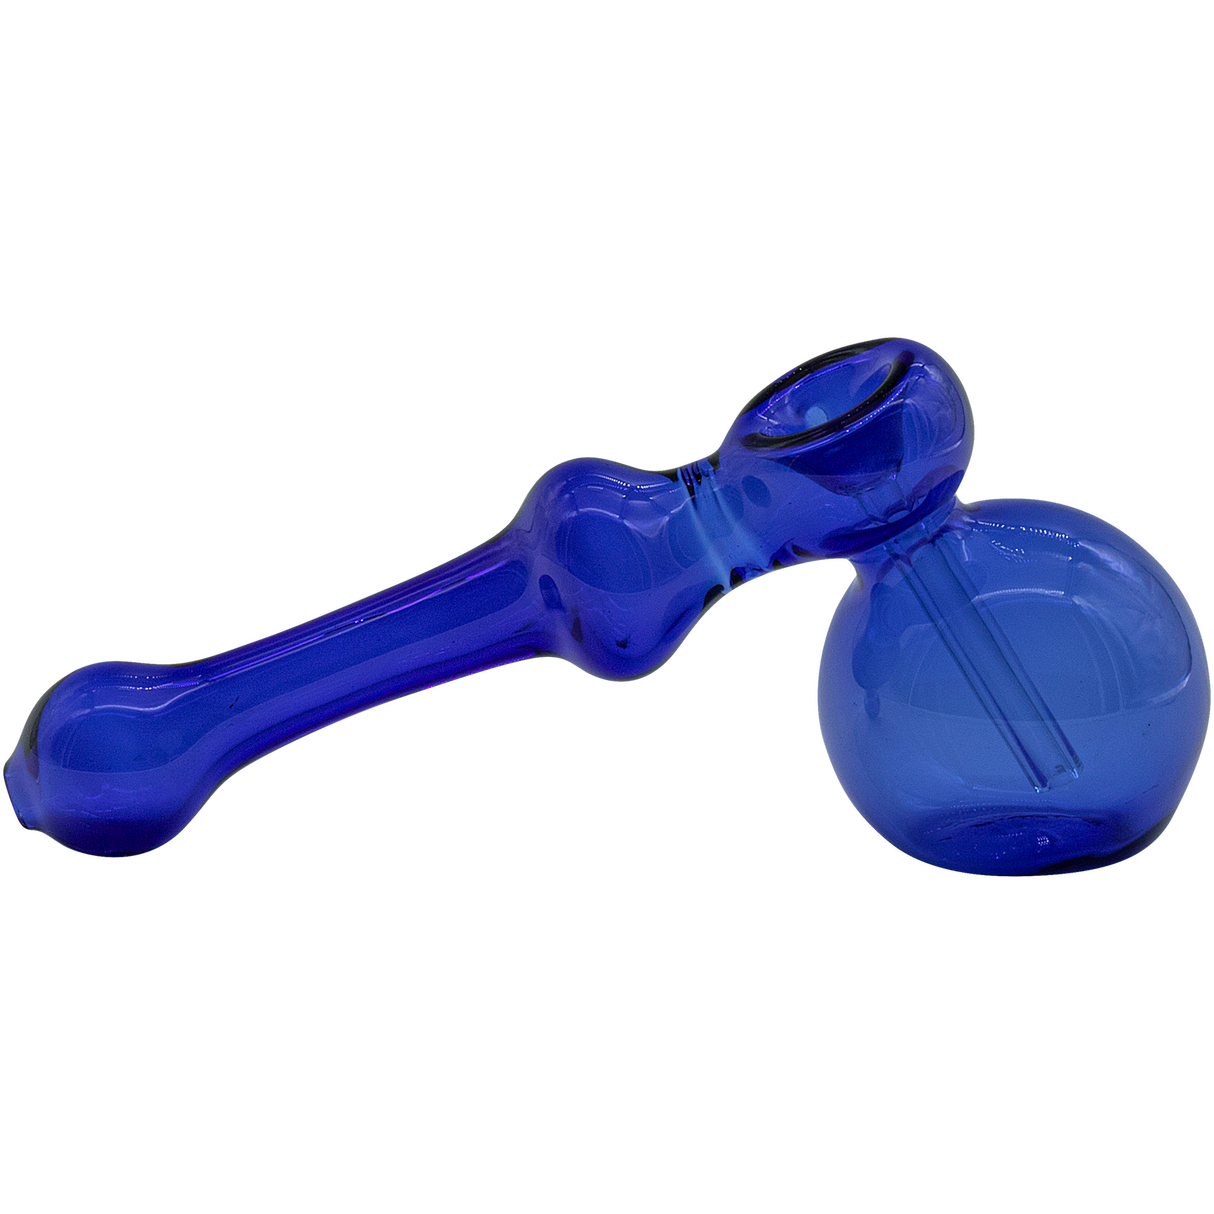 LA Pipes Glass Hammer Bubbler Pipe in Blue - 6" Borosilicate Glass, Side View